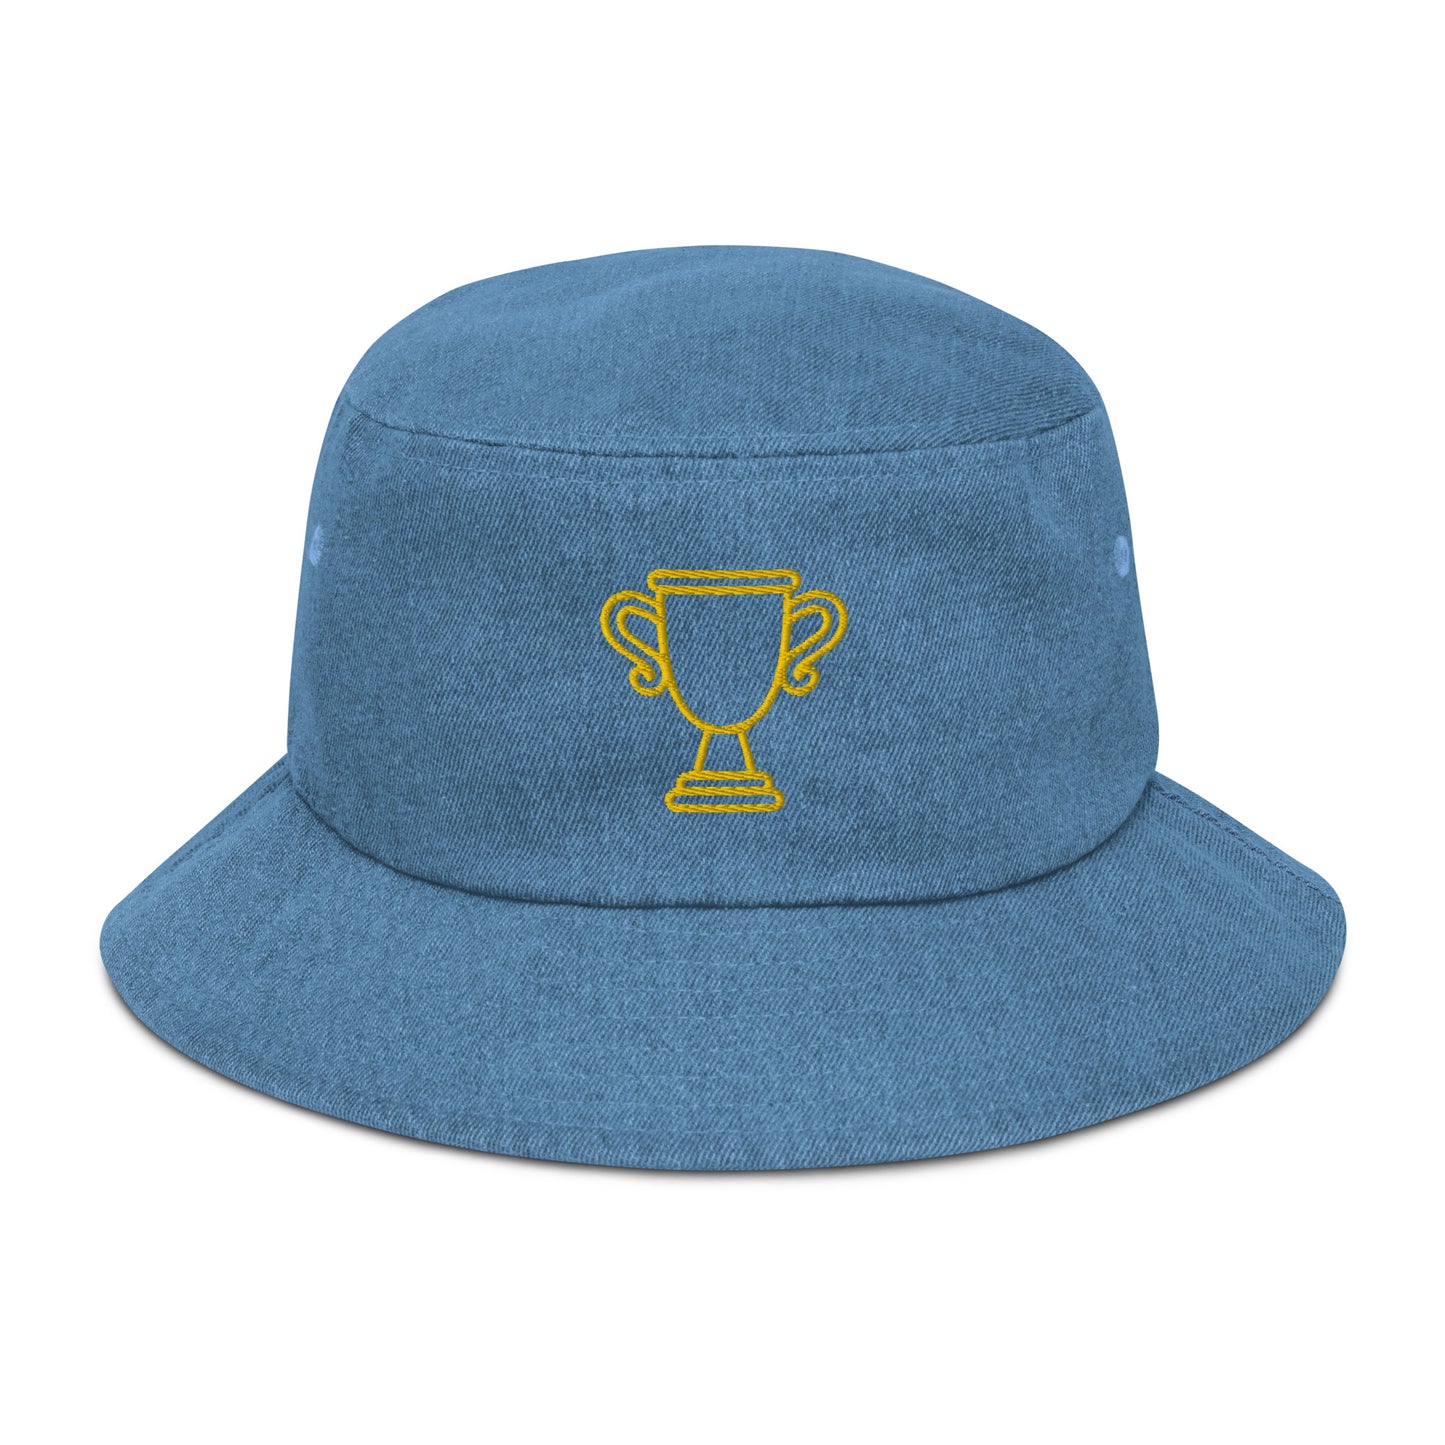 President's Cup Bucket hat / president's Cup 2022 Denim bucket hat